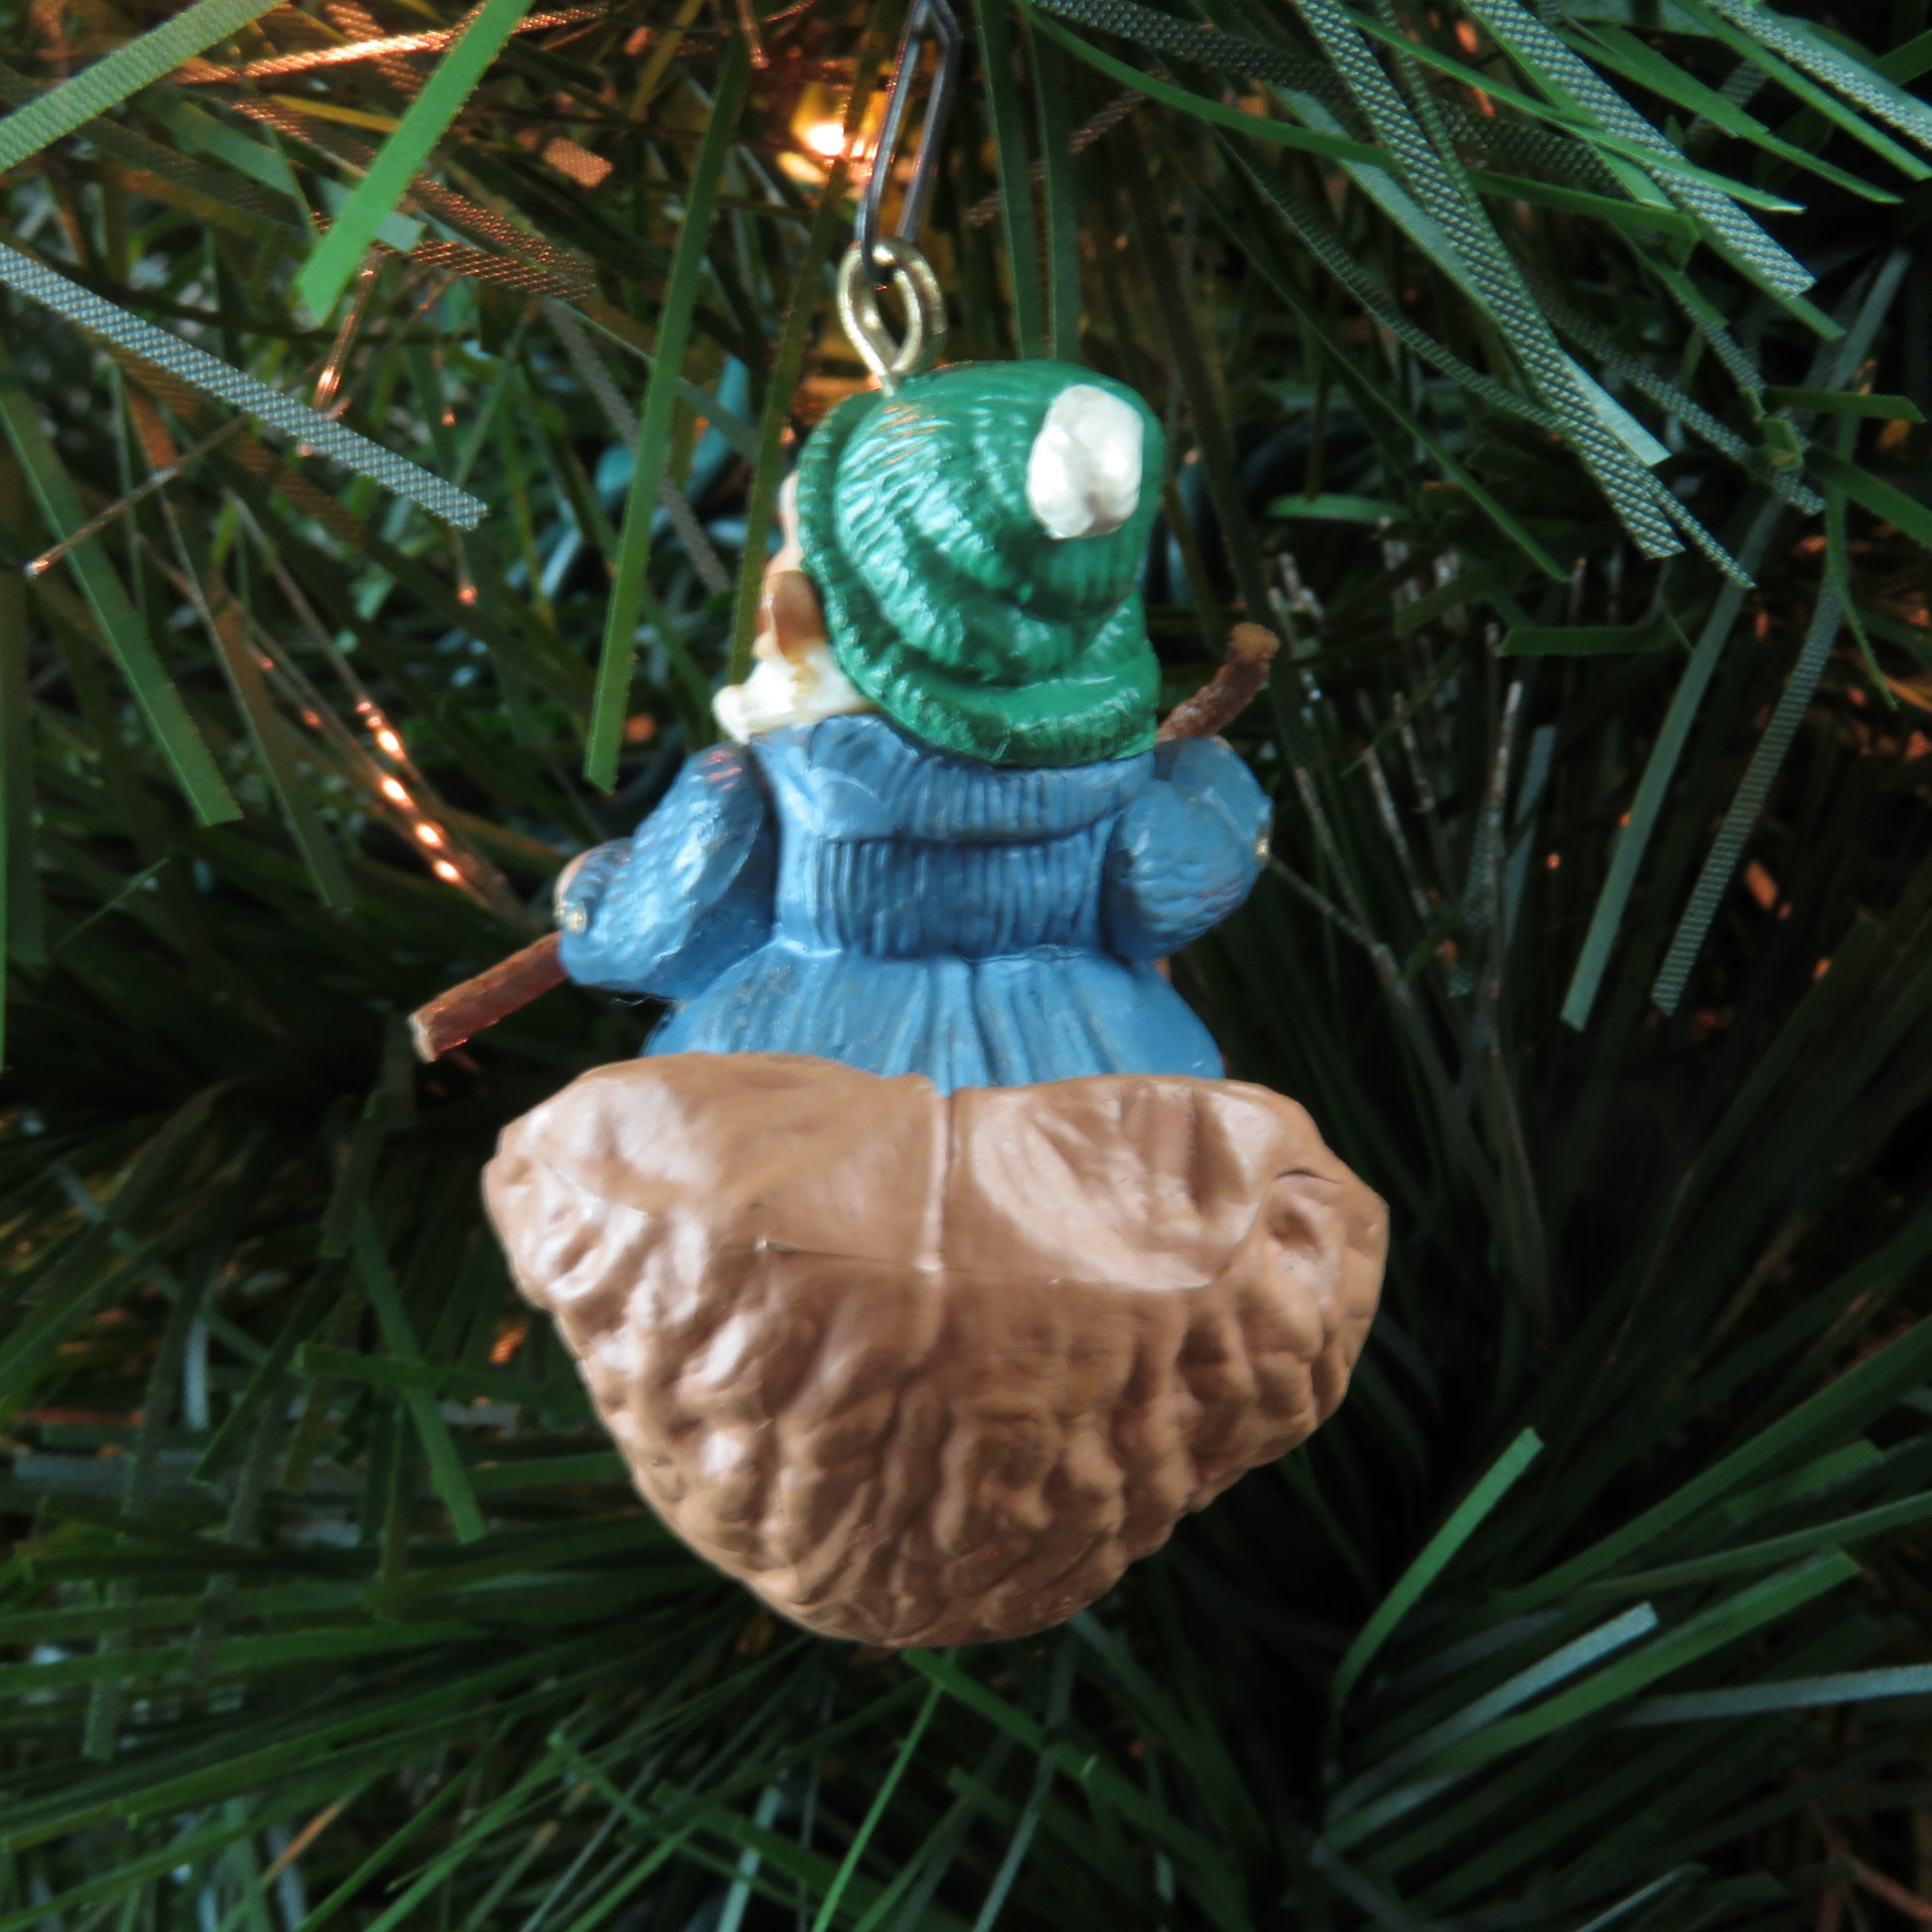 Vintage Walnut Shell Rider Elf or Gnome Hallmark Keepsake Christmas Ornament 1986 - At Grandma's Table